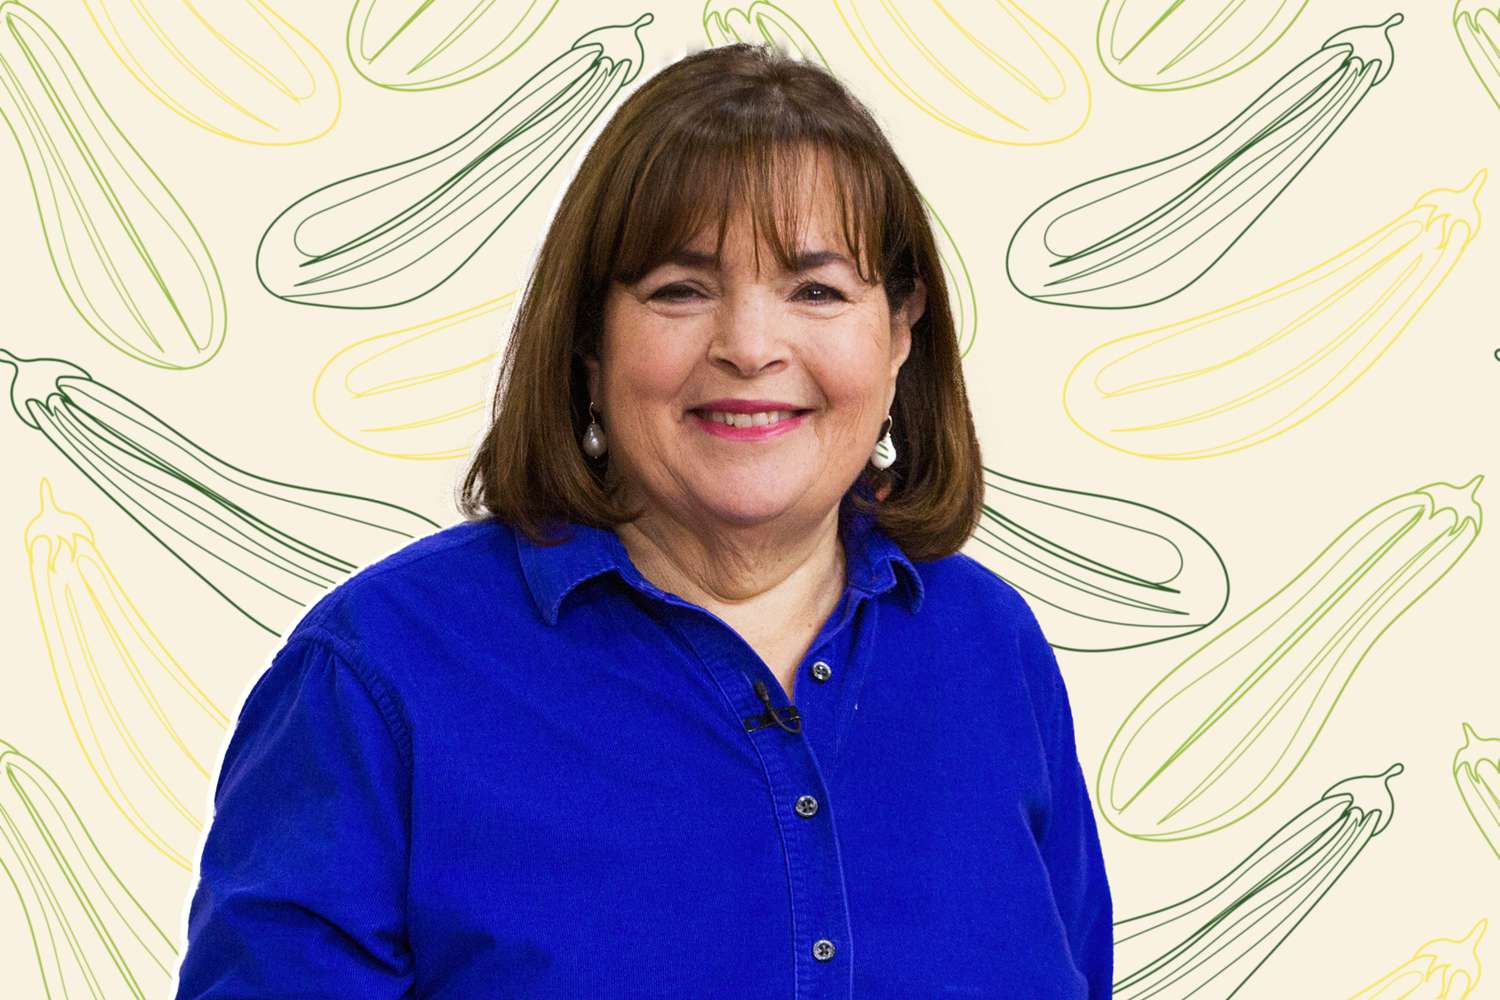 Ina Garten on a designed background of zucchinis